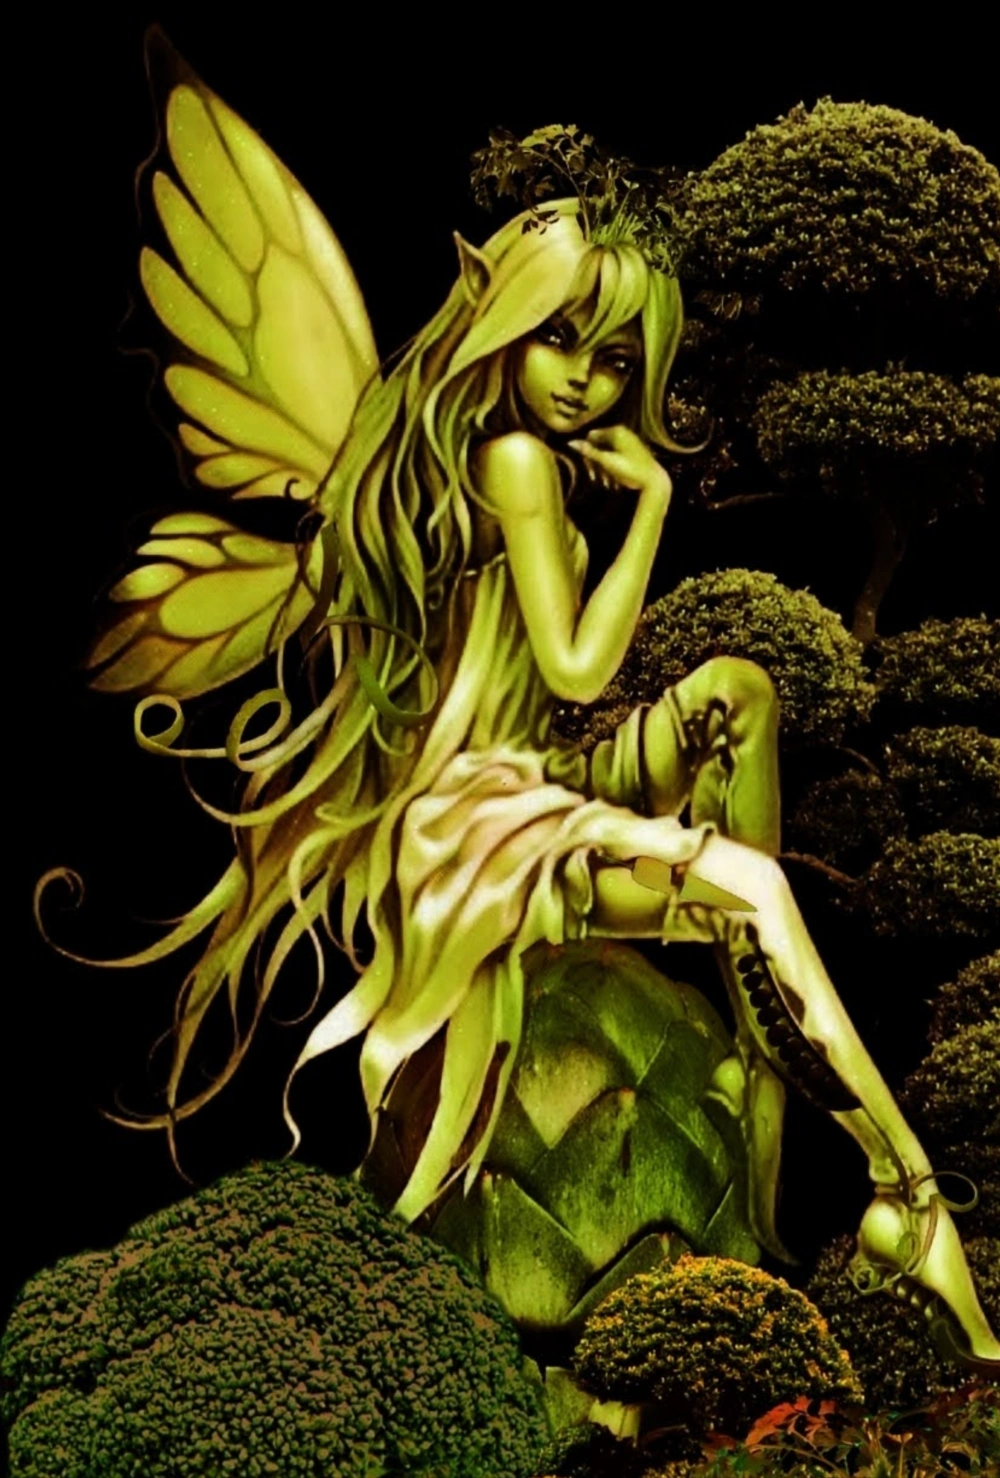 Pea Green 💚
#pixie #fairy